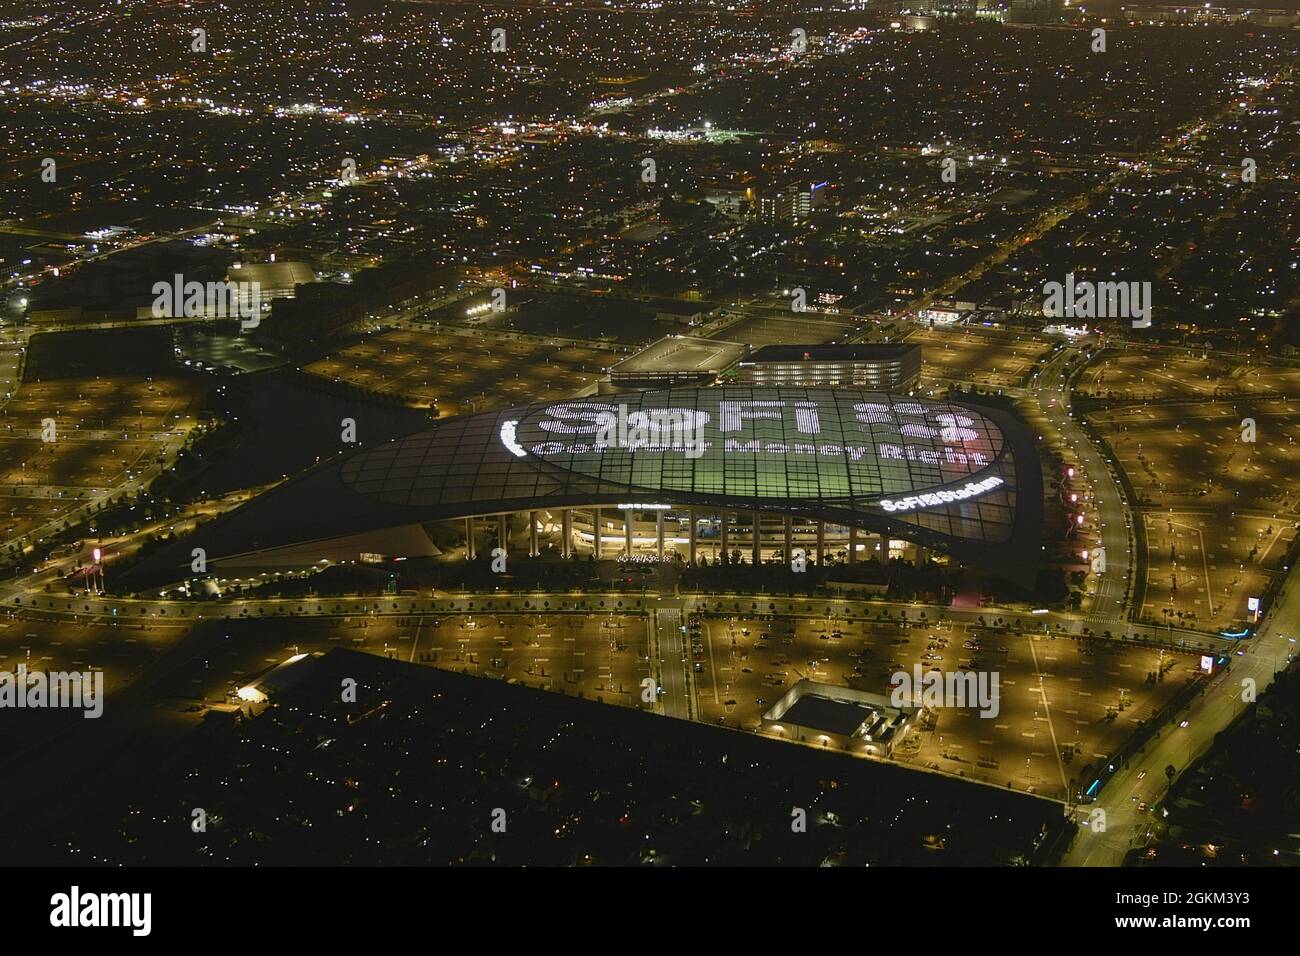 Sofi stadium hi-res stock photography and images - Alamy